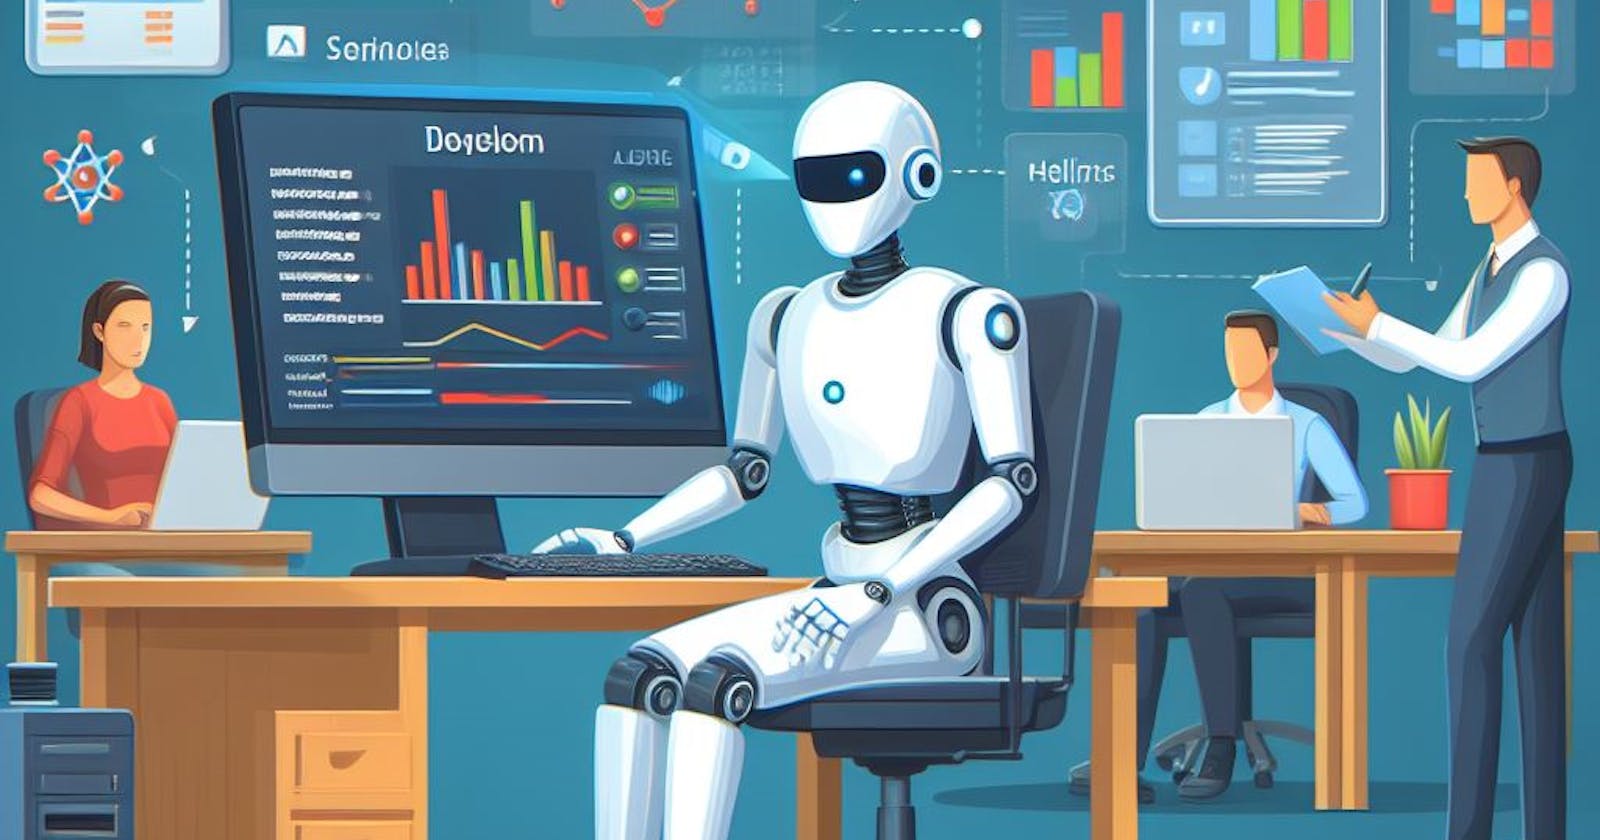 The Role of Artificial Intelligence in DevOps